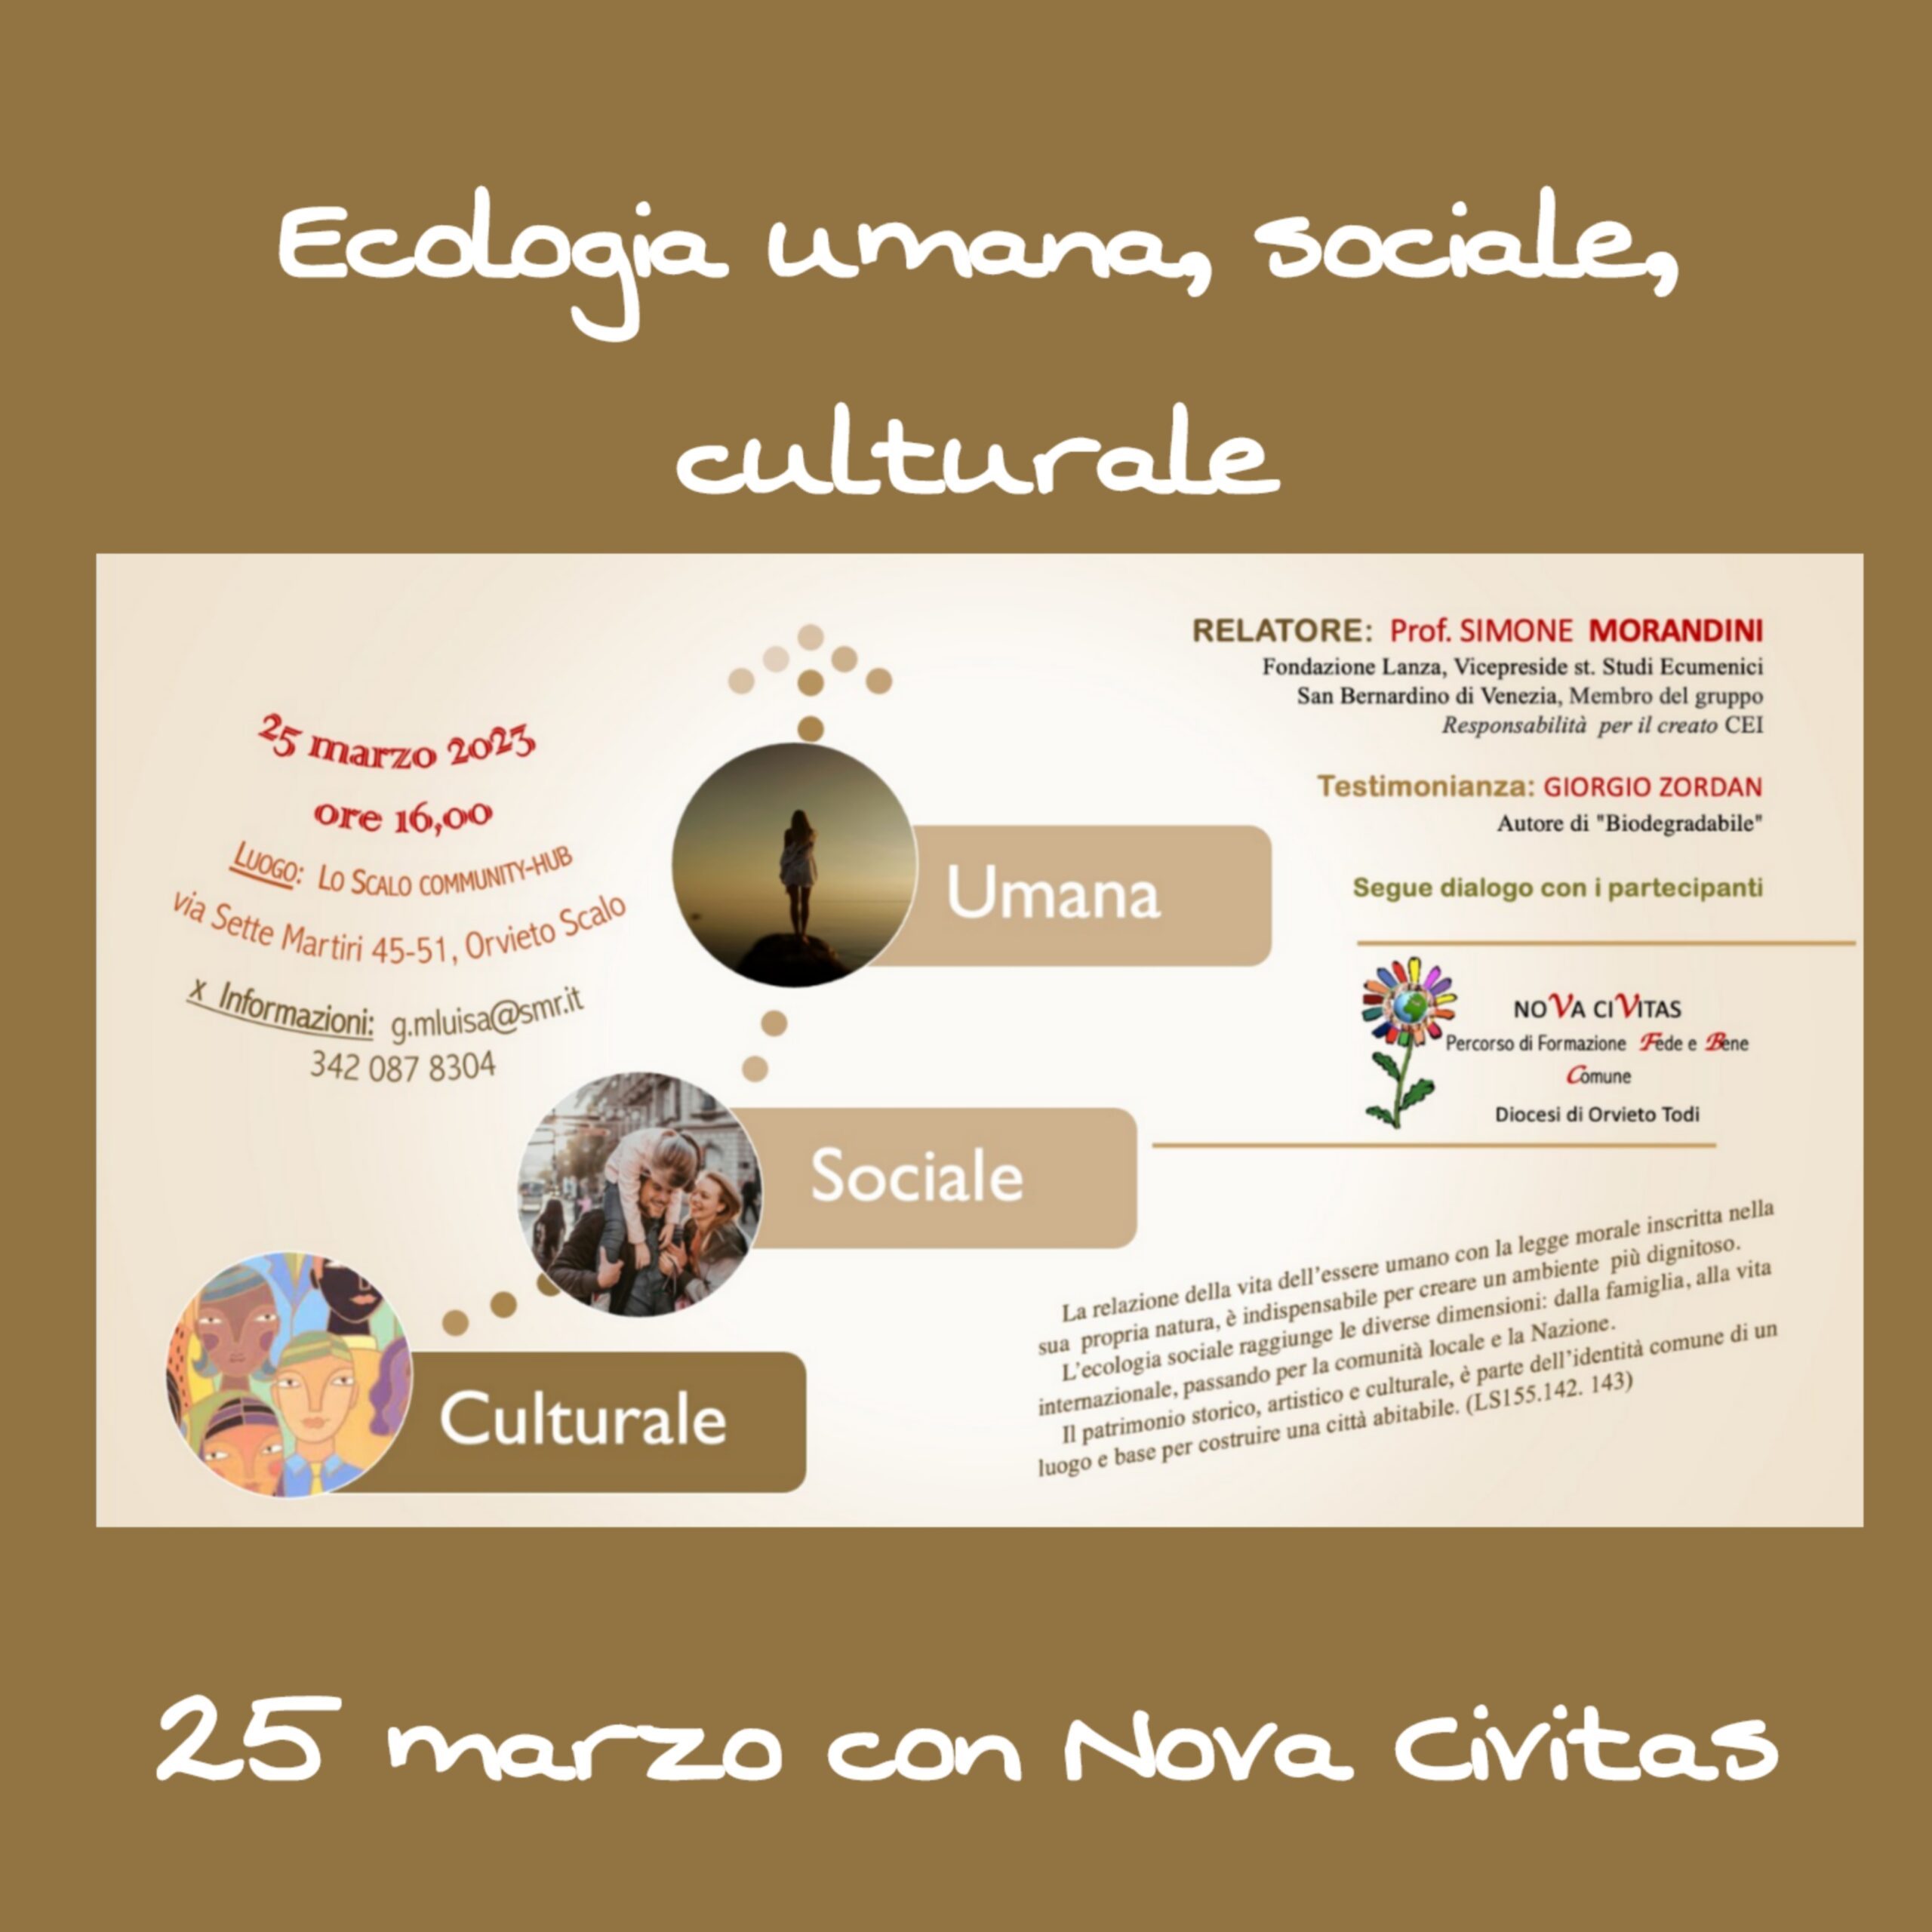 ecologia-umana,-sociale-culturale-se-ne-parla-a-nova-civitas